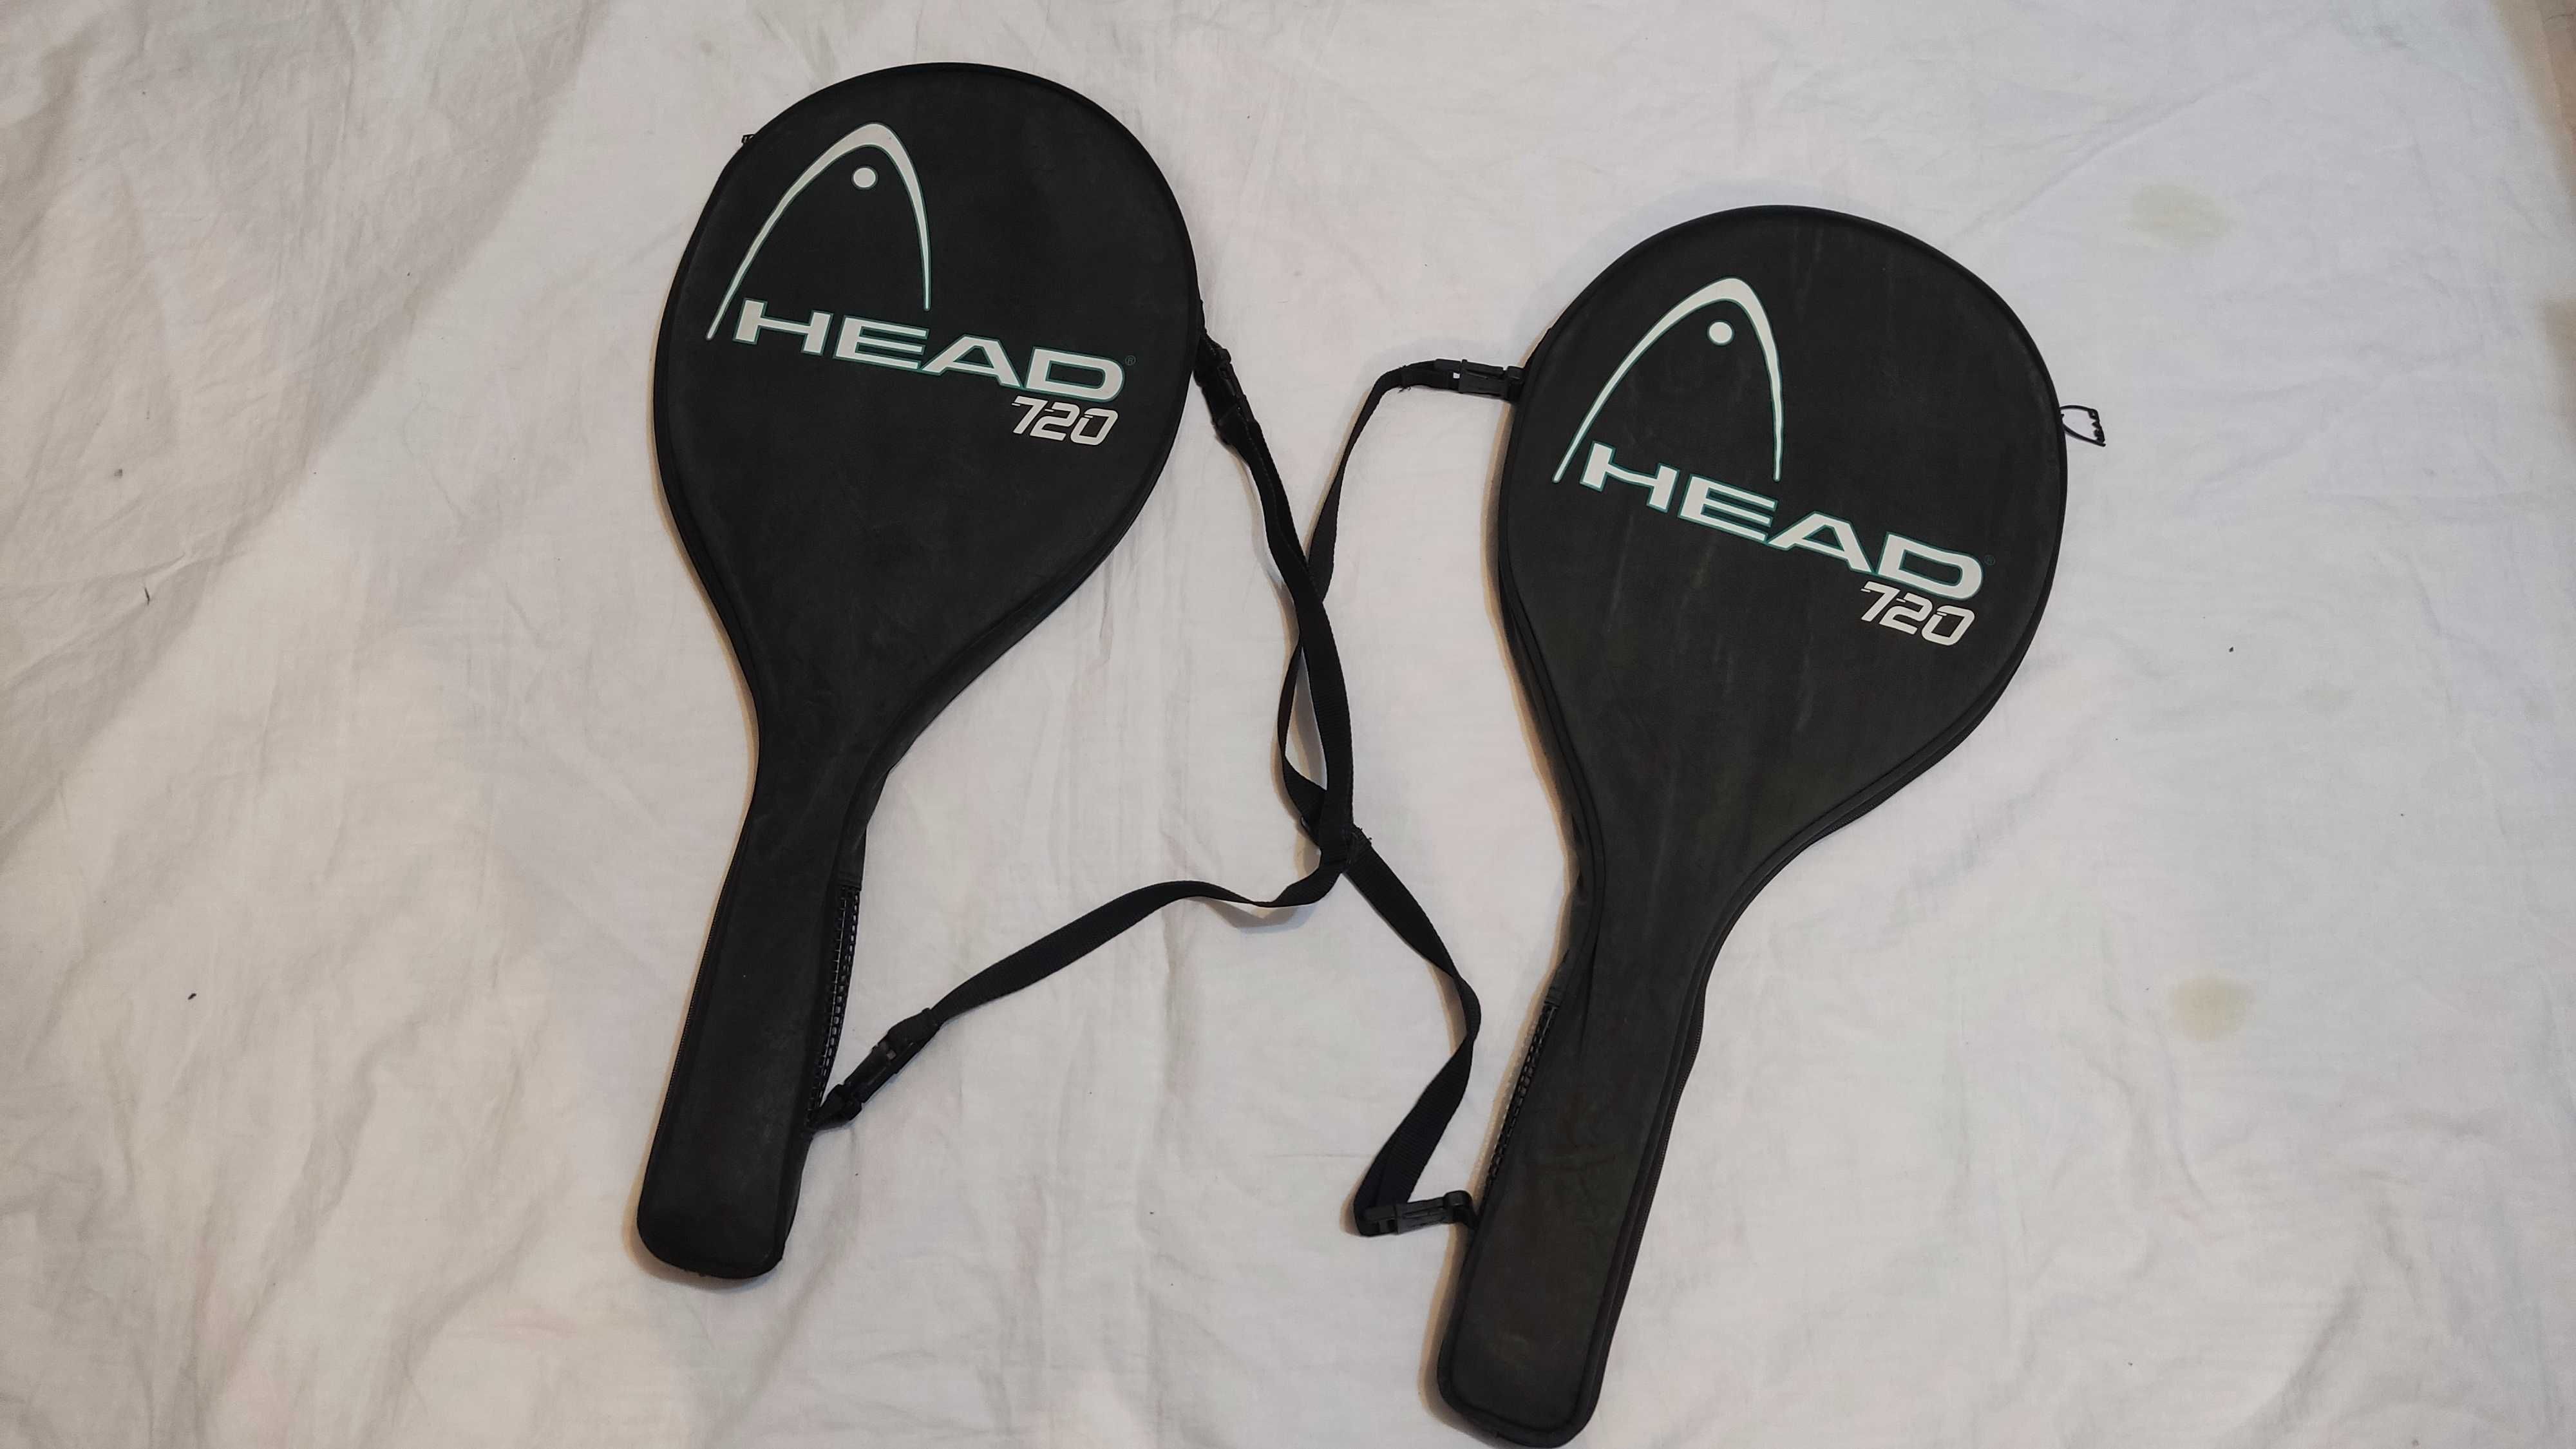 Head Ventoris 720 Made in Austria 280 și 530 tenis cimp palete rachete